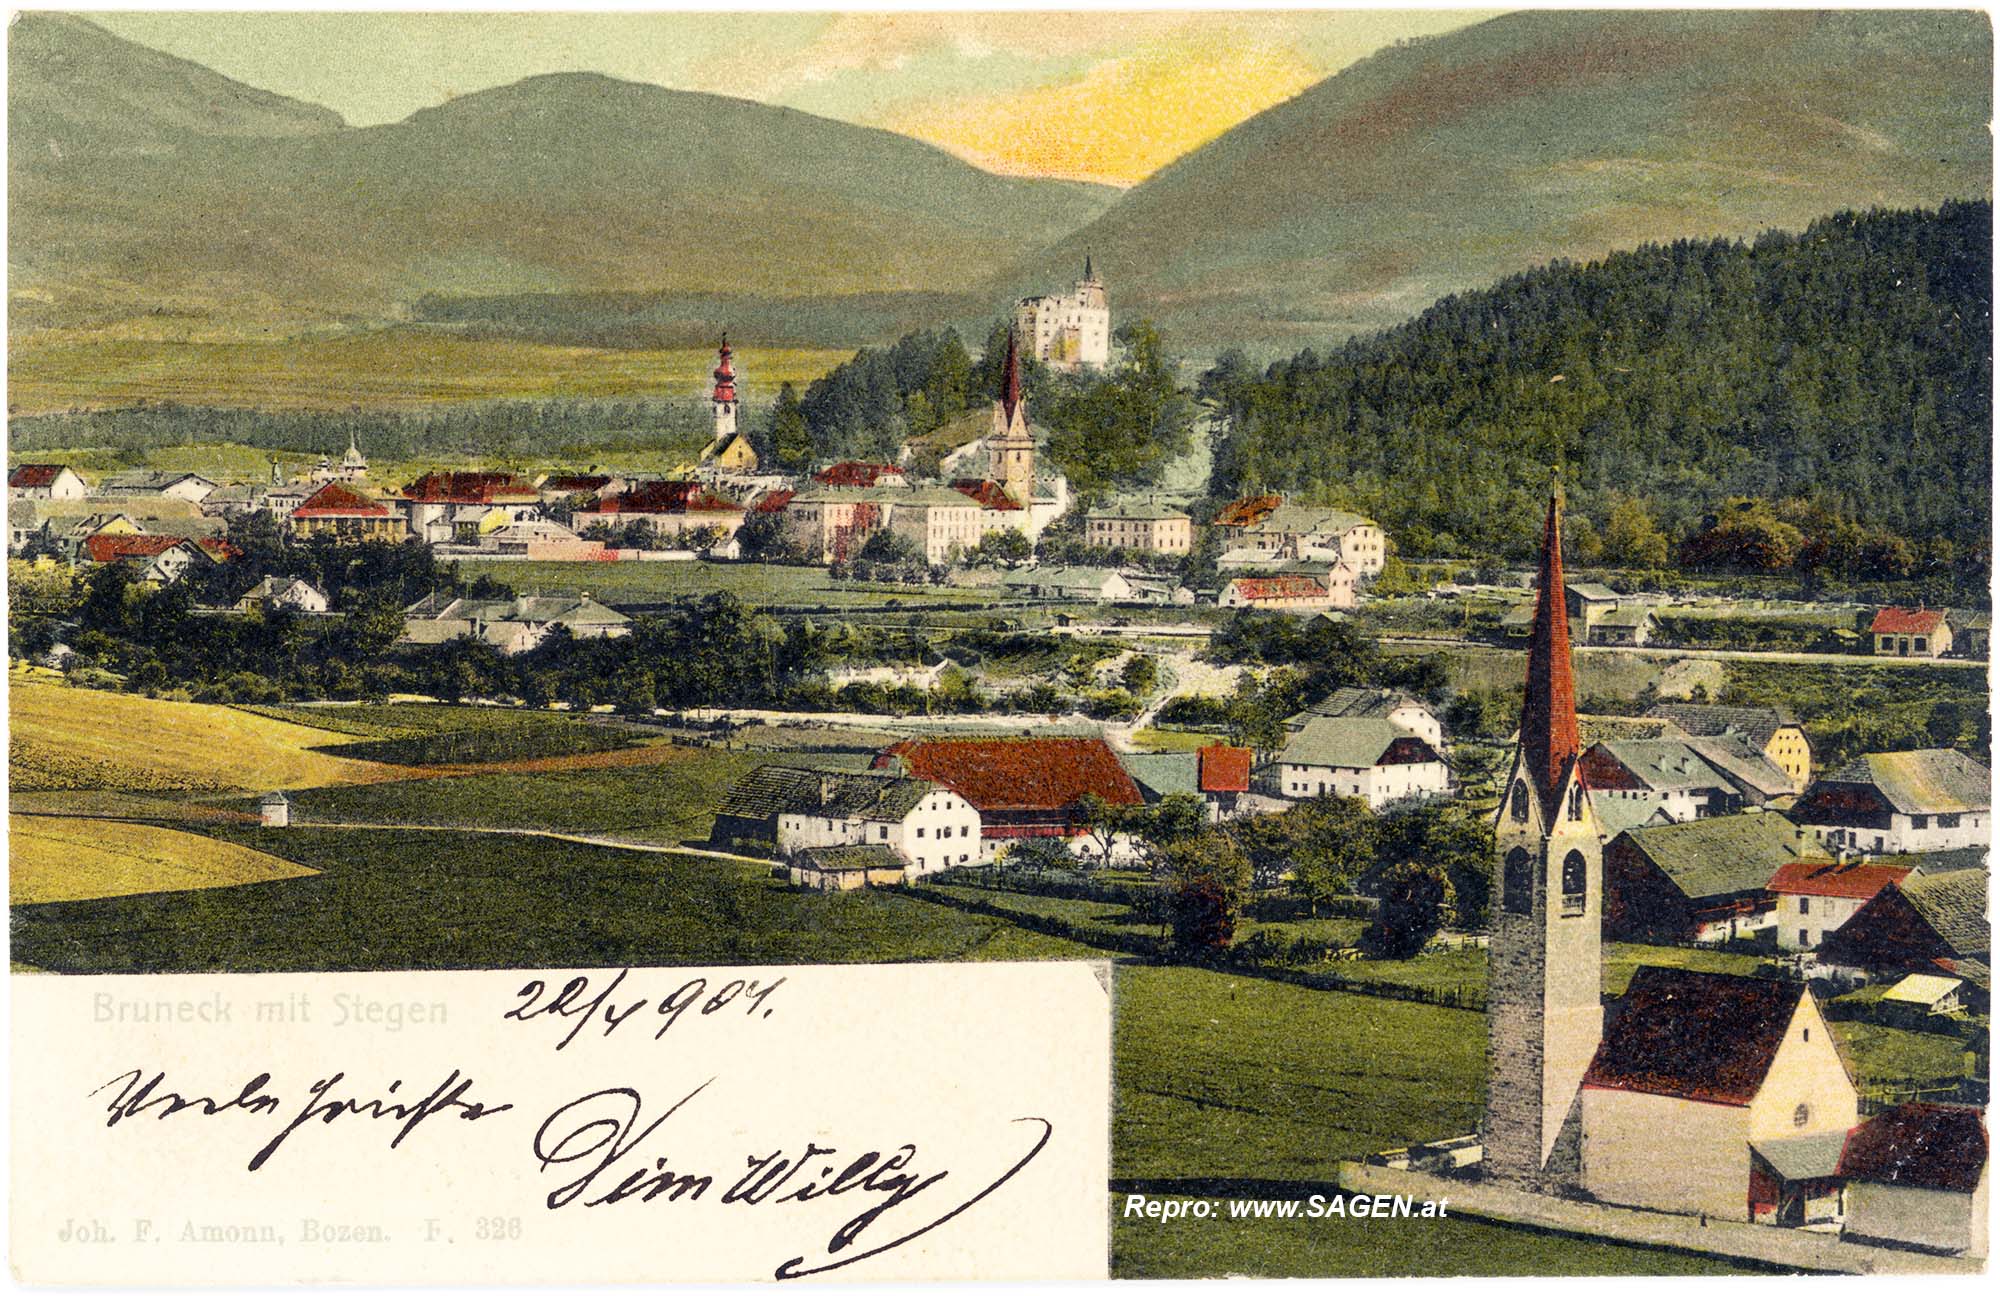 Bruneck mit Stegen um 1903